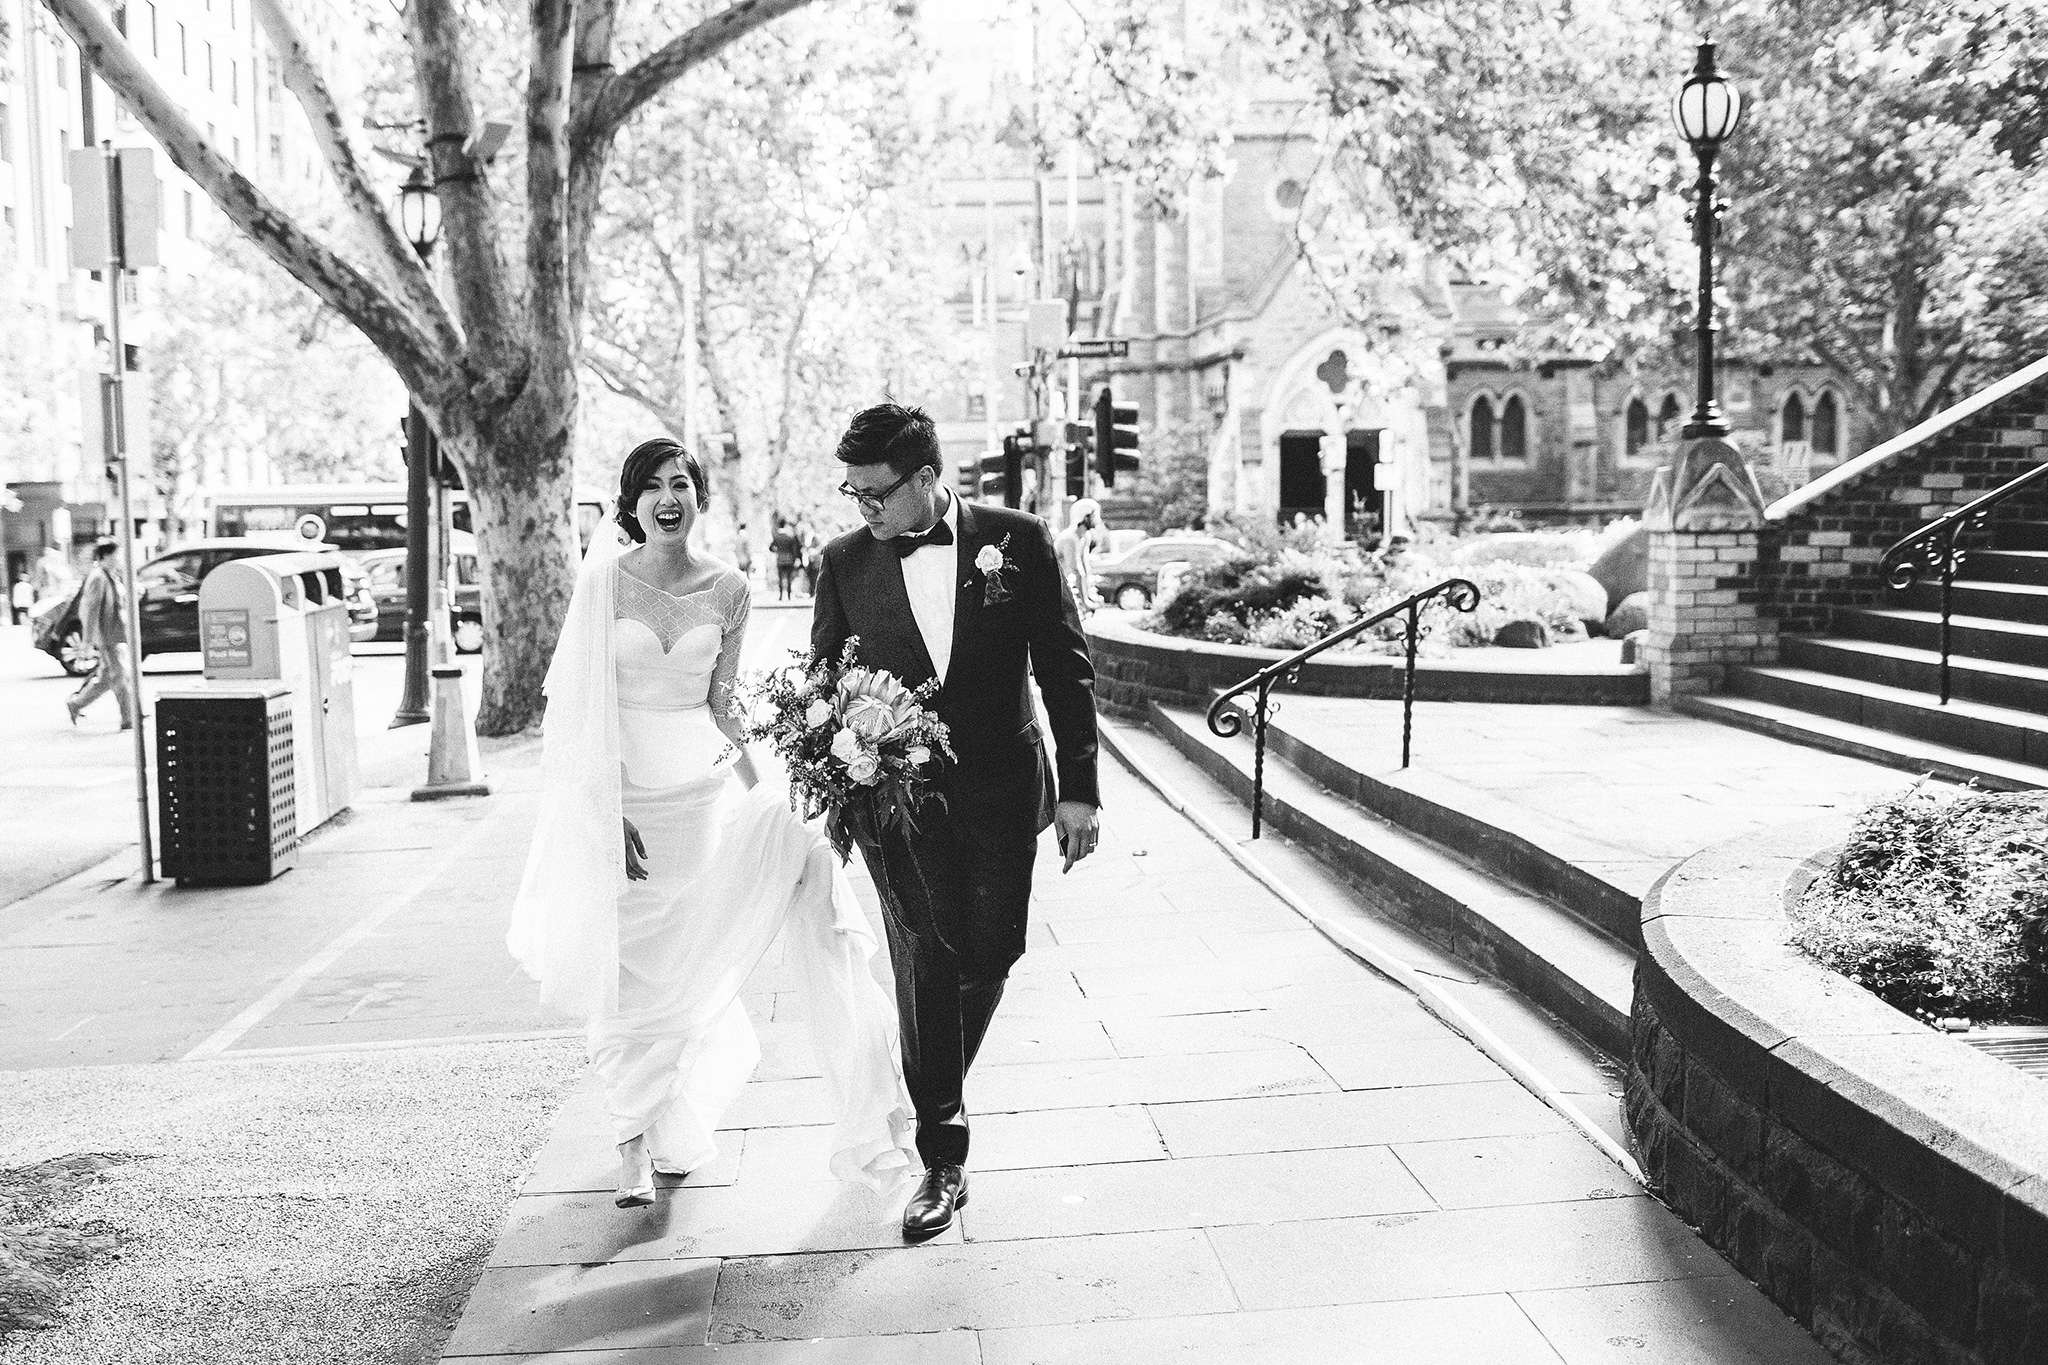 Melbourne-sofitel-wedding-photographer-portraits